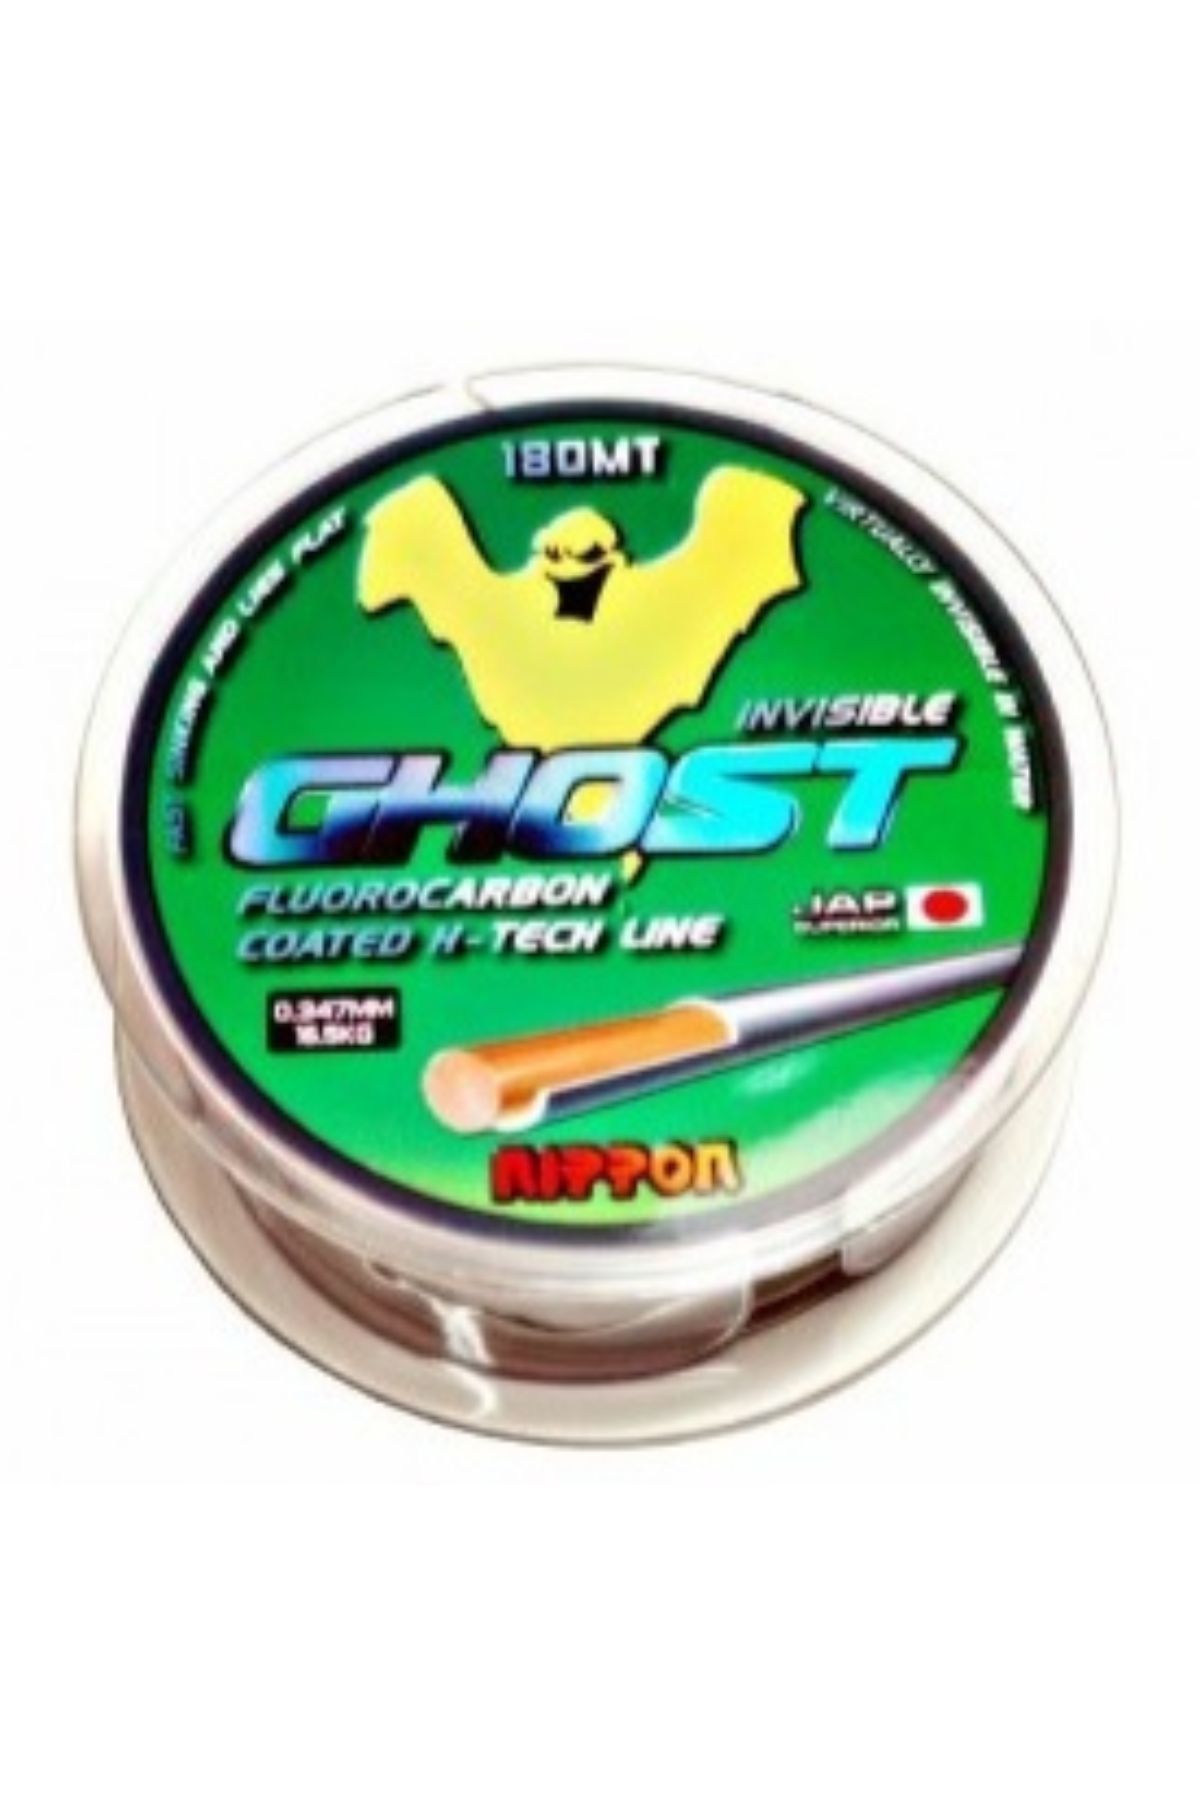 NIPPON Nippon Ghost Fluorocarbon Misina / 180mt 0.278mm / Çekeri: 11,5 Kg